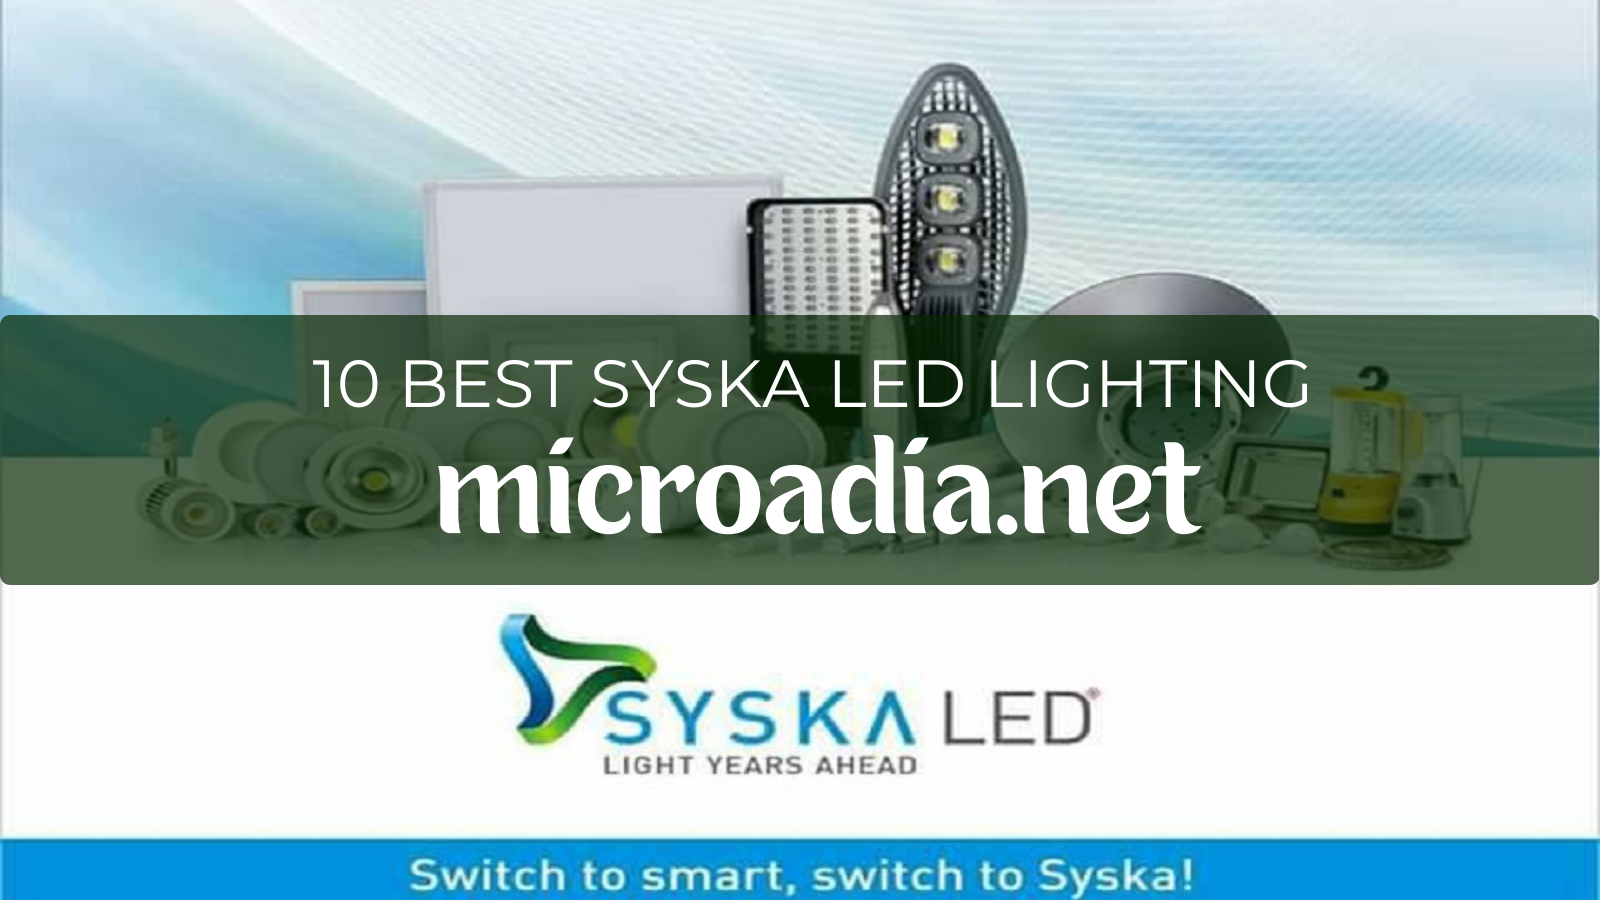 10 best syska LED lighting